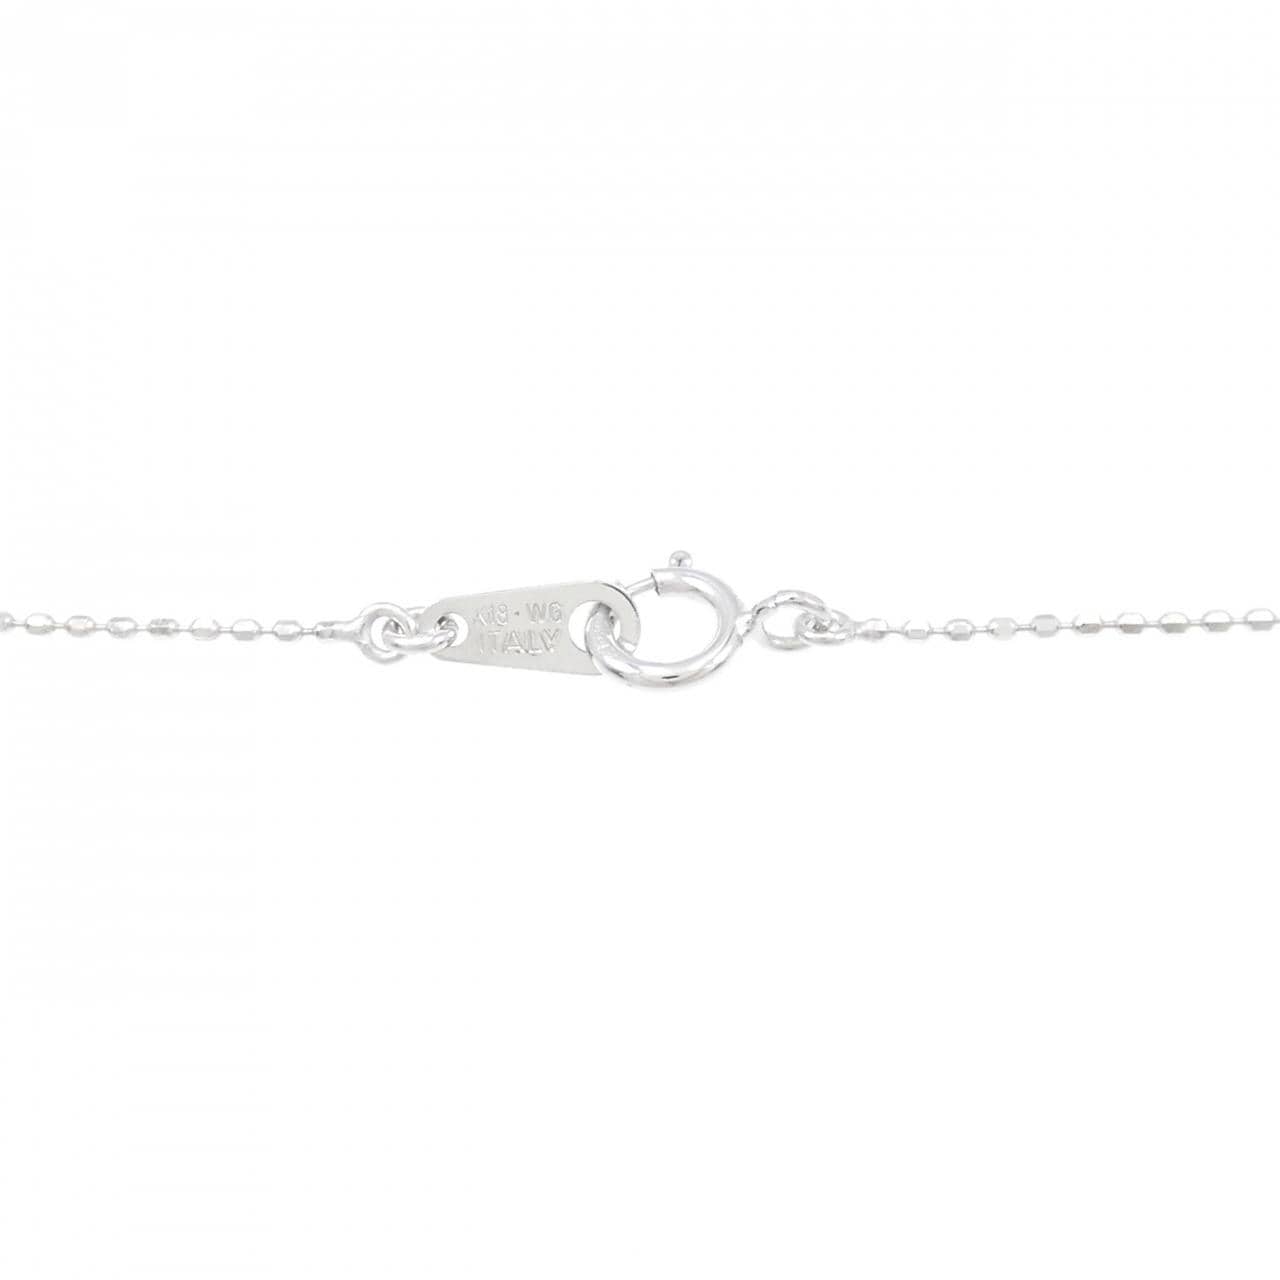 K18WG heart Diamond necklace 0.50CT